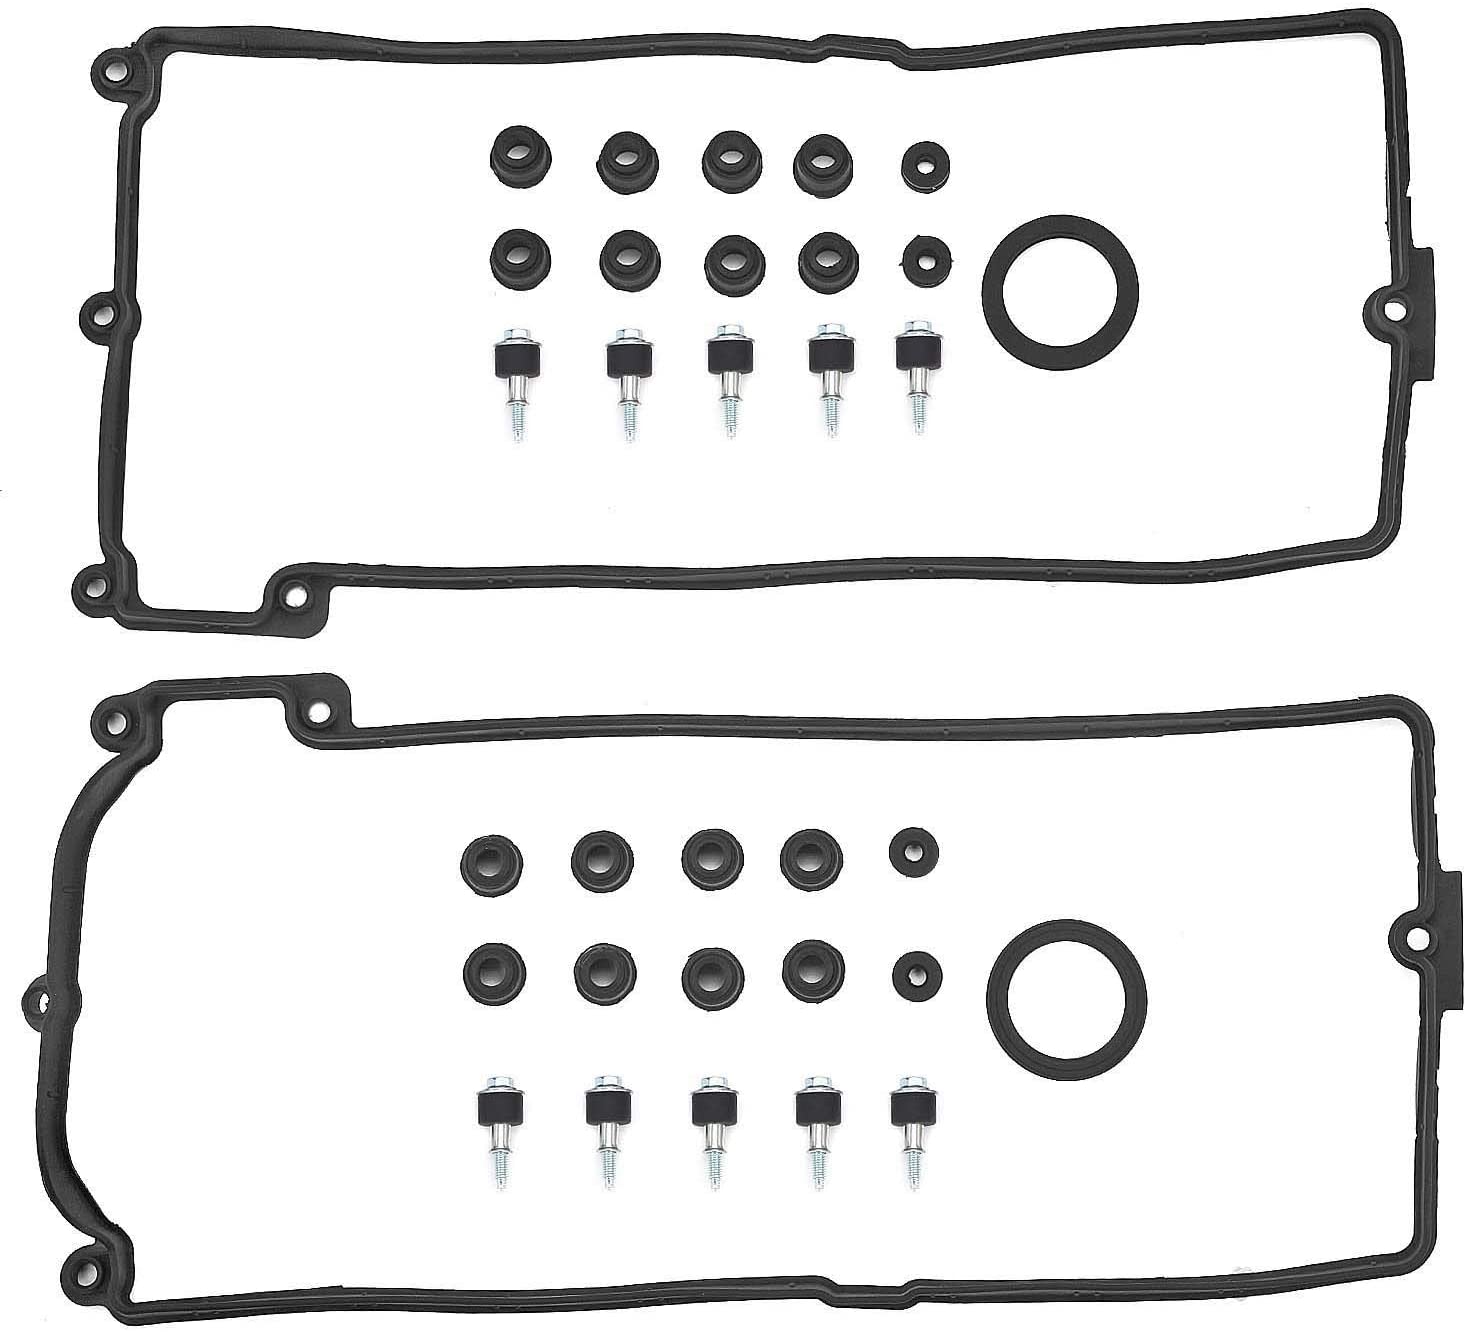 Valve Cover Gaskets Kit (Left & Right) For BMW 545i 550i 645Ci 650i 745i 745Li 750i 750Li Alpina B7 X5 4.4L 4.8L V8, Repl.# 11127513195, 11 12 7 513 194